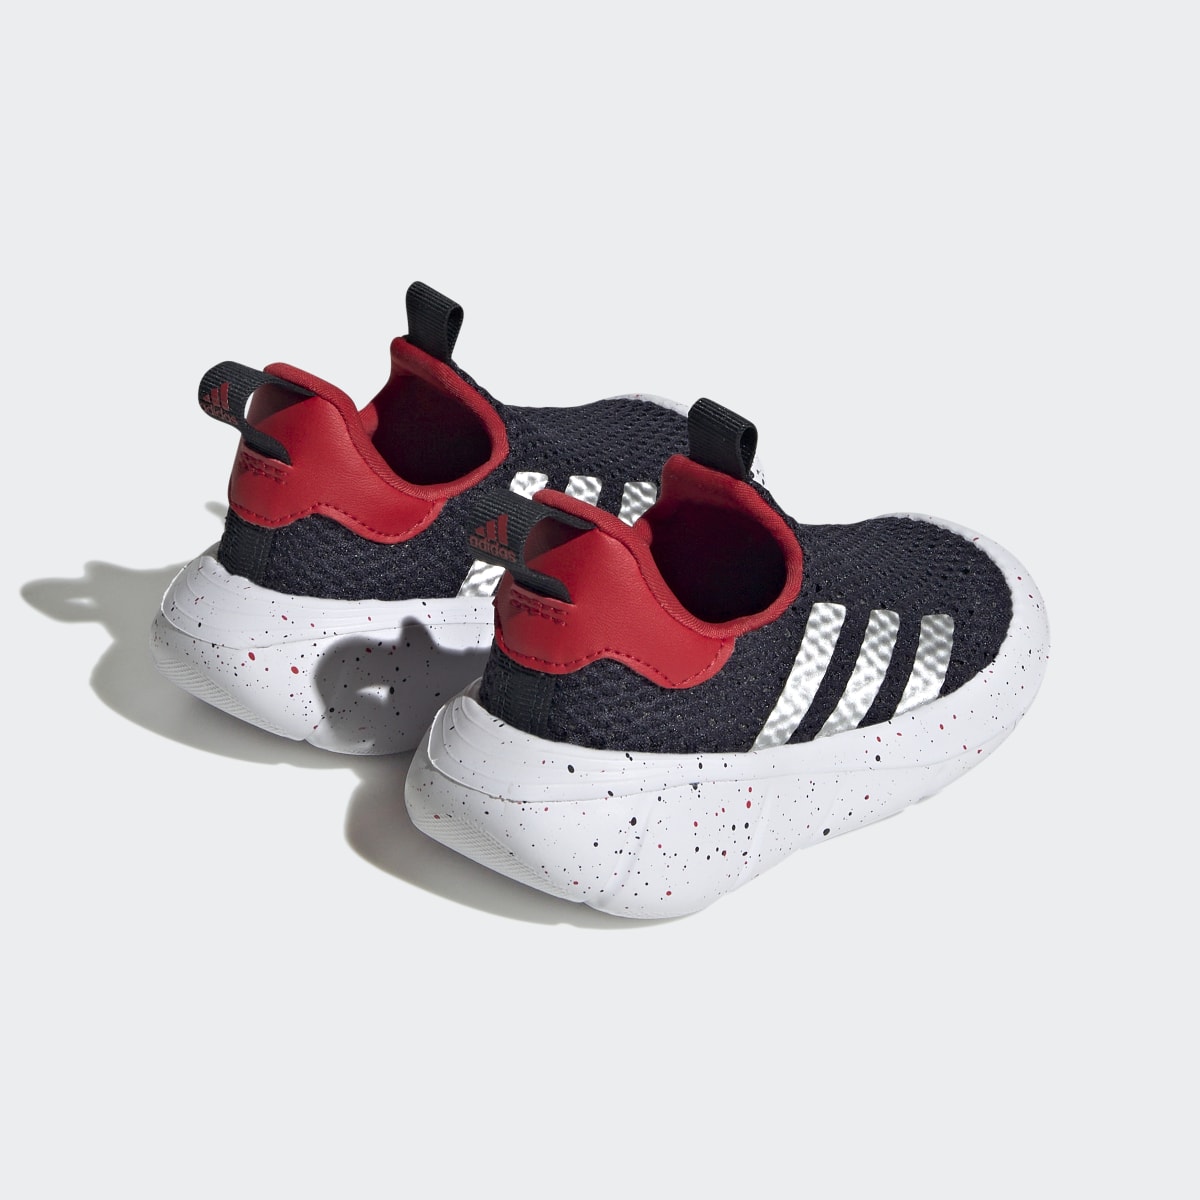 Adidas MONOFIT Trainer Lifestyle Slip-on Shoes. 6